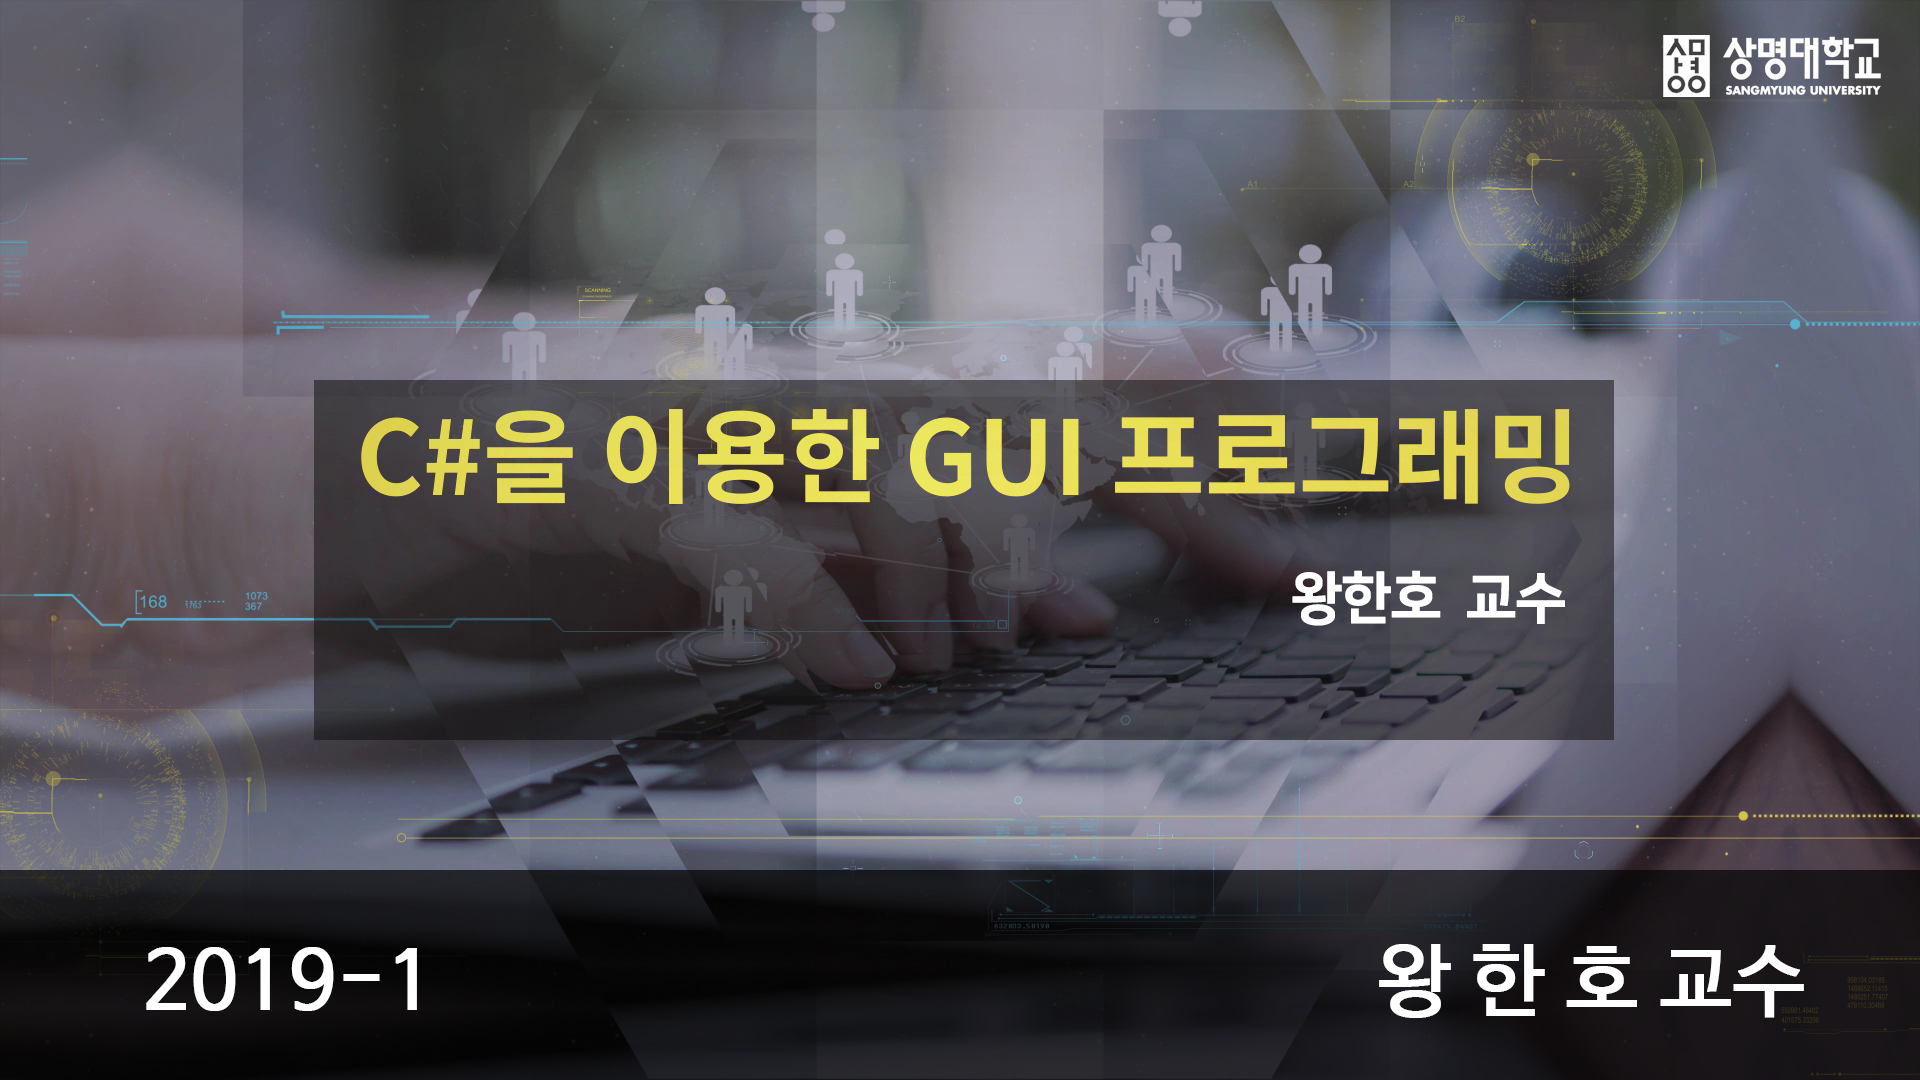 C#을 이용한 GUI프로그래밍 개강일 2019-03-04 종강일 2019-06-16 강좌상태 종료